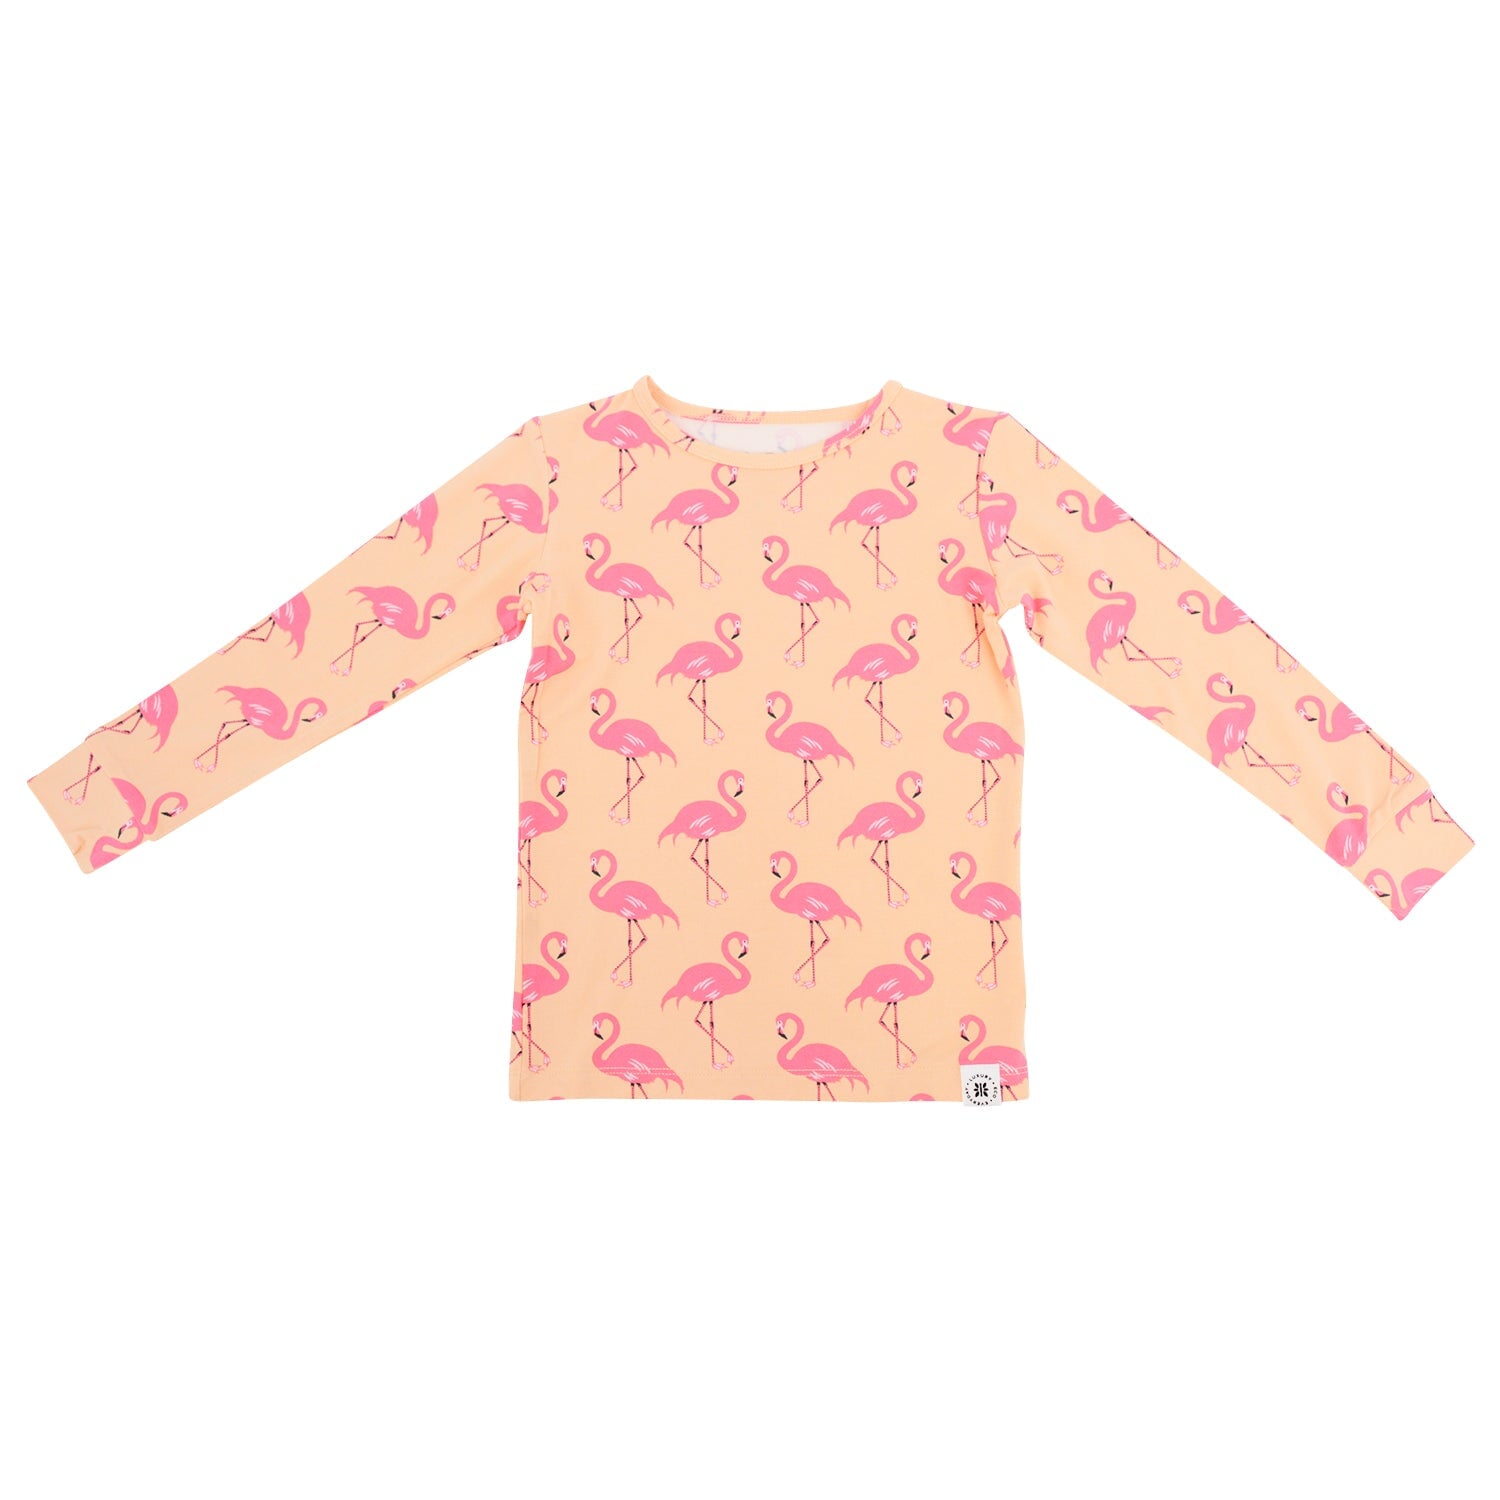 Big Kid Pajama - Flamingo Peach